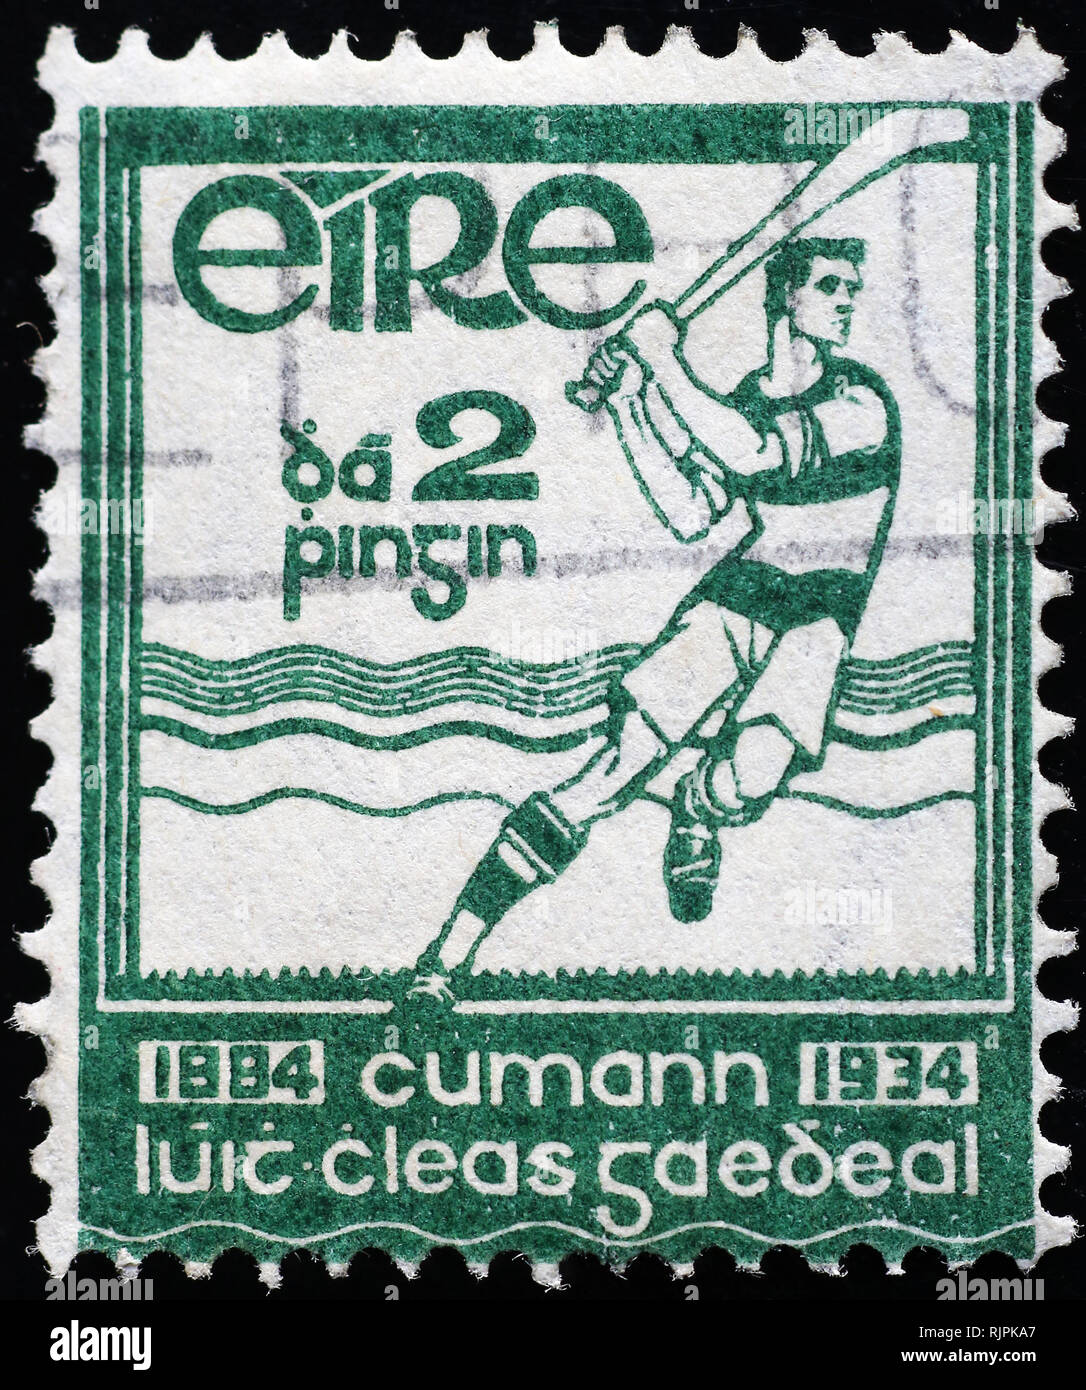 Field hockey player on ancient irish postage stamp Stock Photo